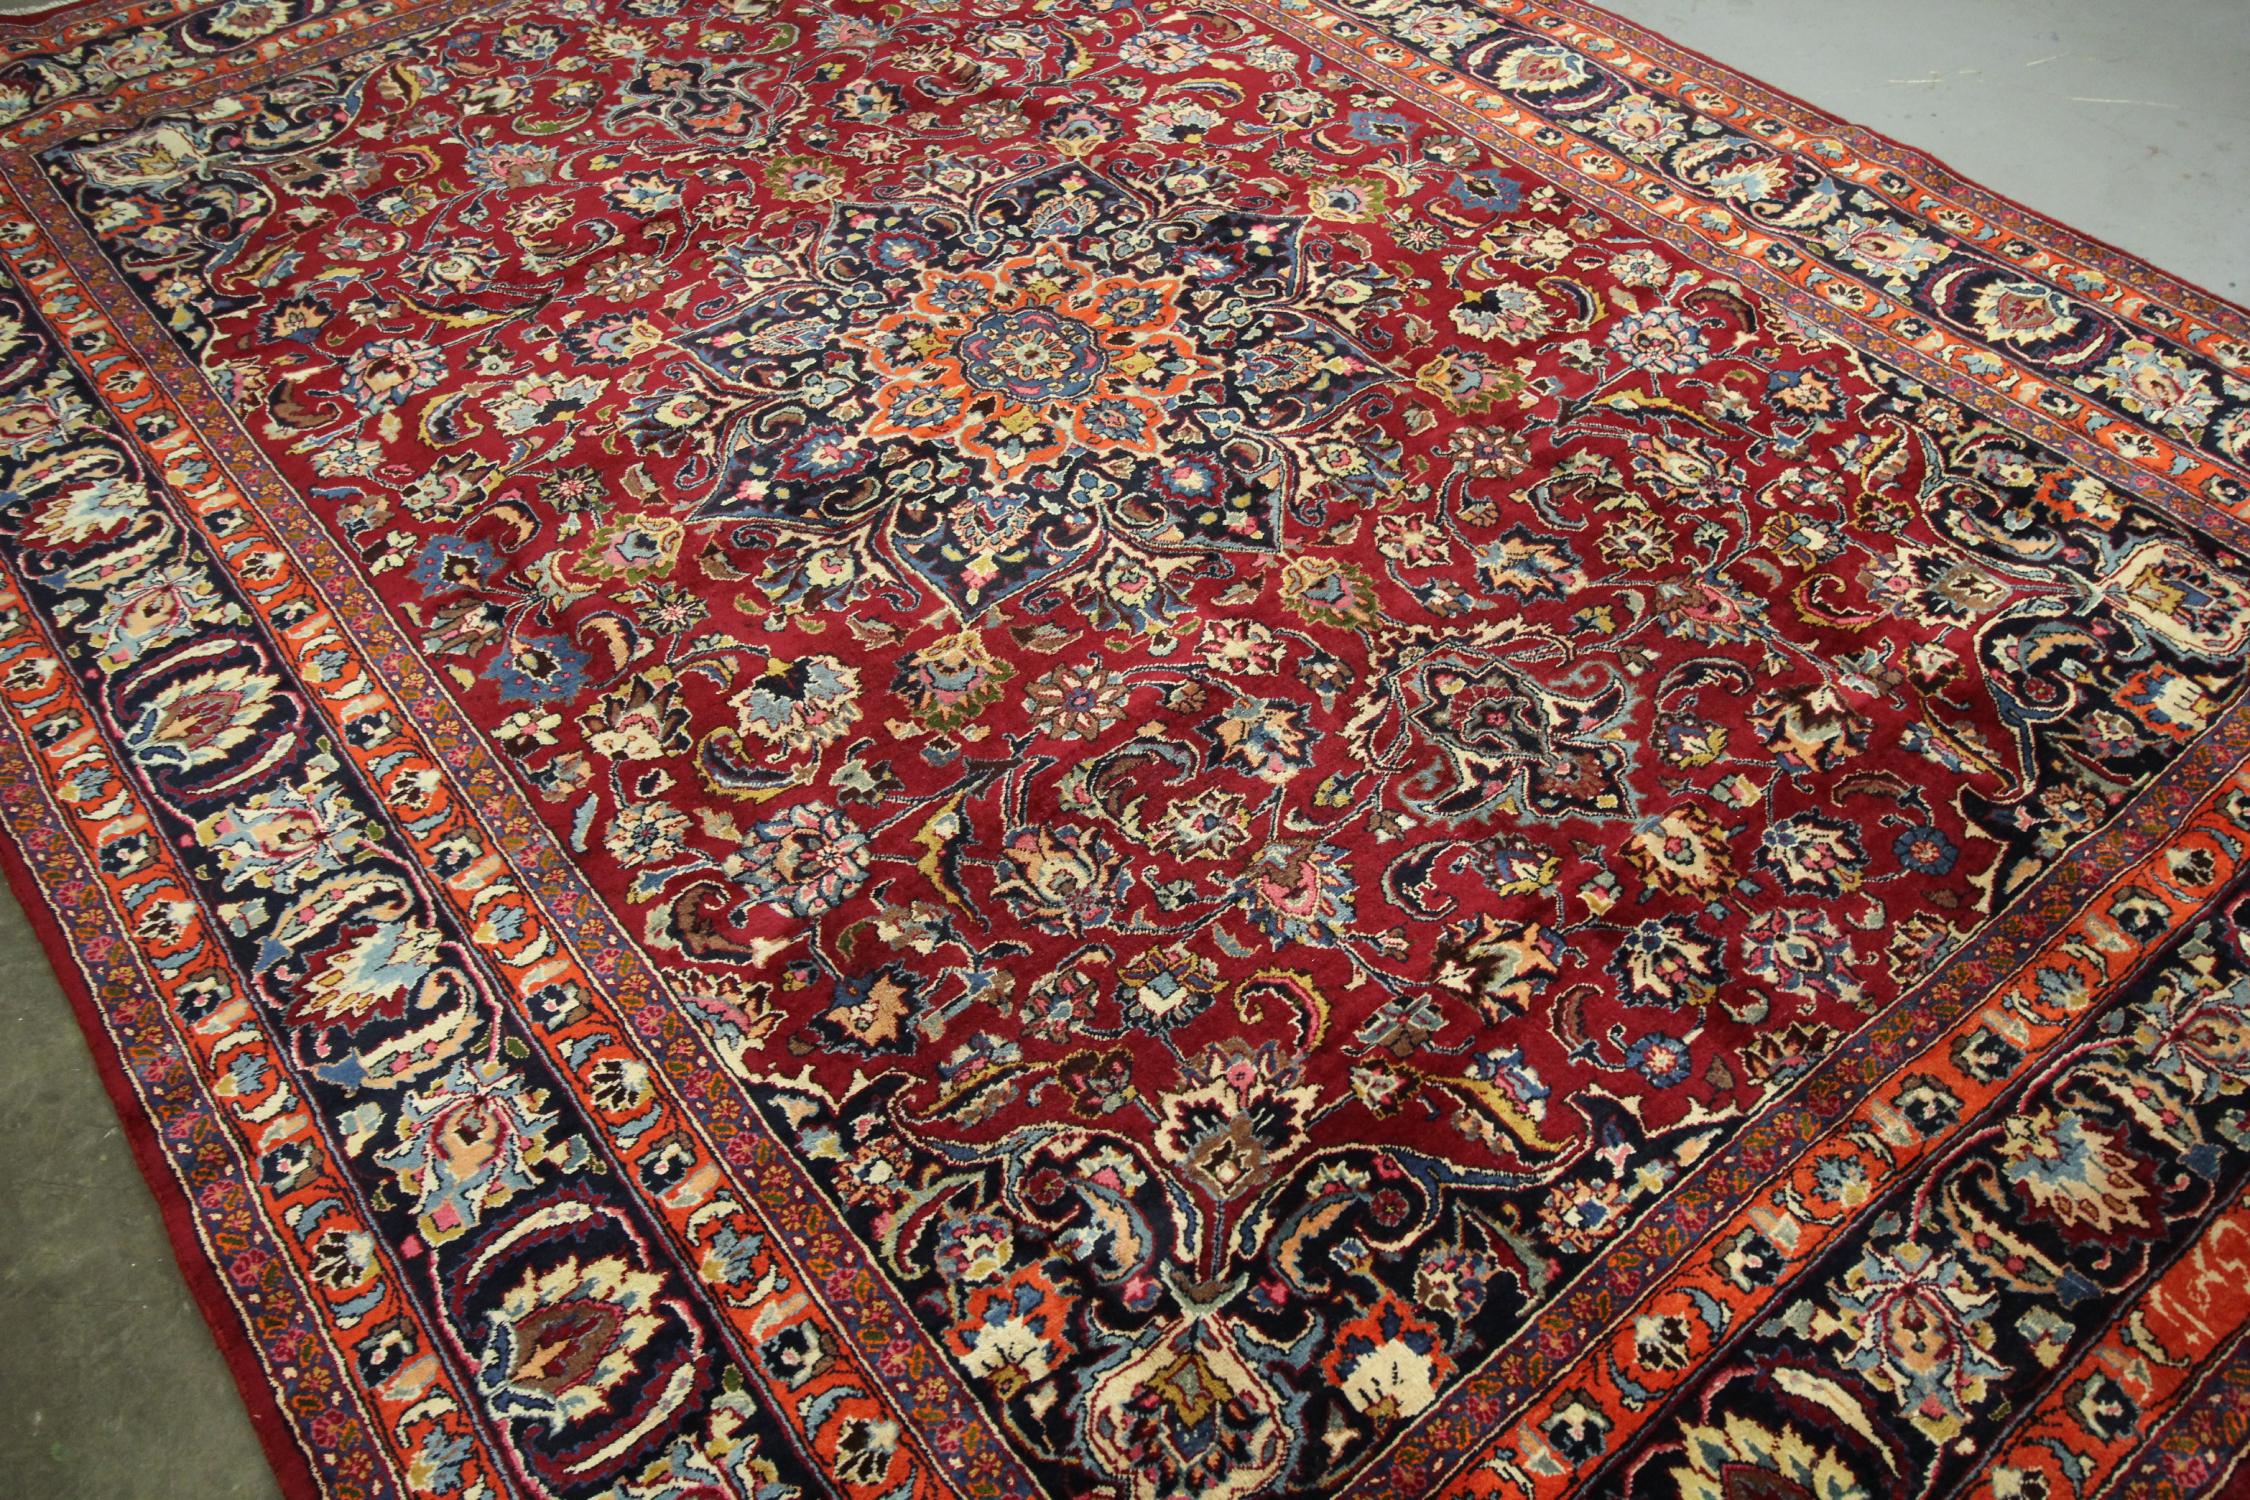 Baroque Revival Vintage Rug Knotted Pile Carpet Turkish Handmade Oriental Wool Rug For Sale